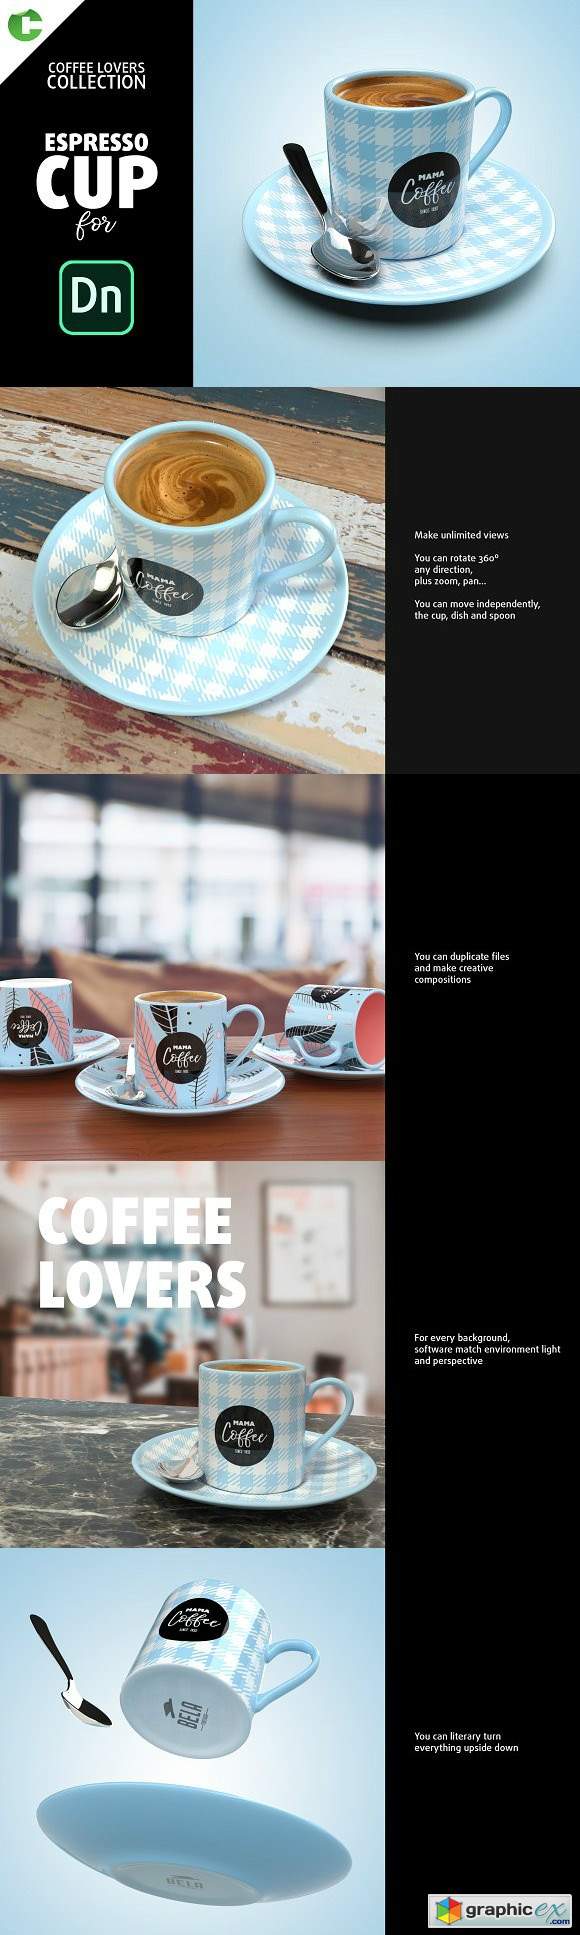 Espresso CUP mock-up